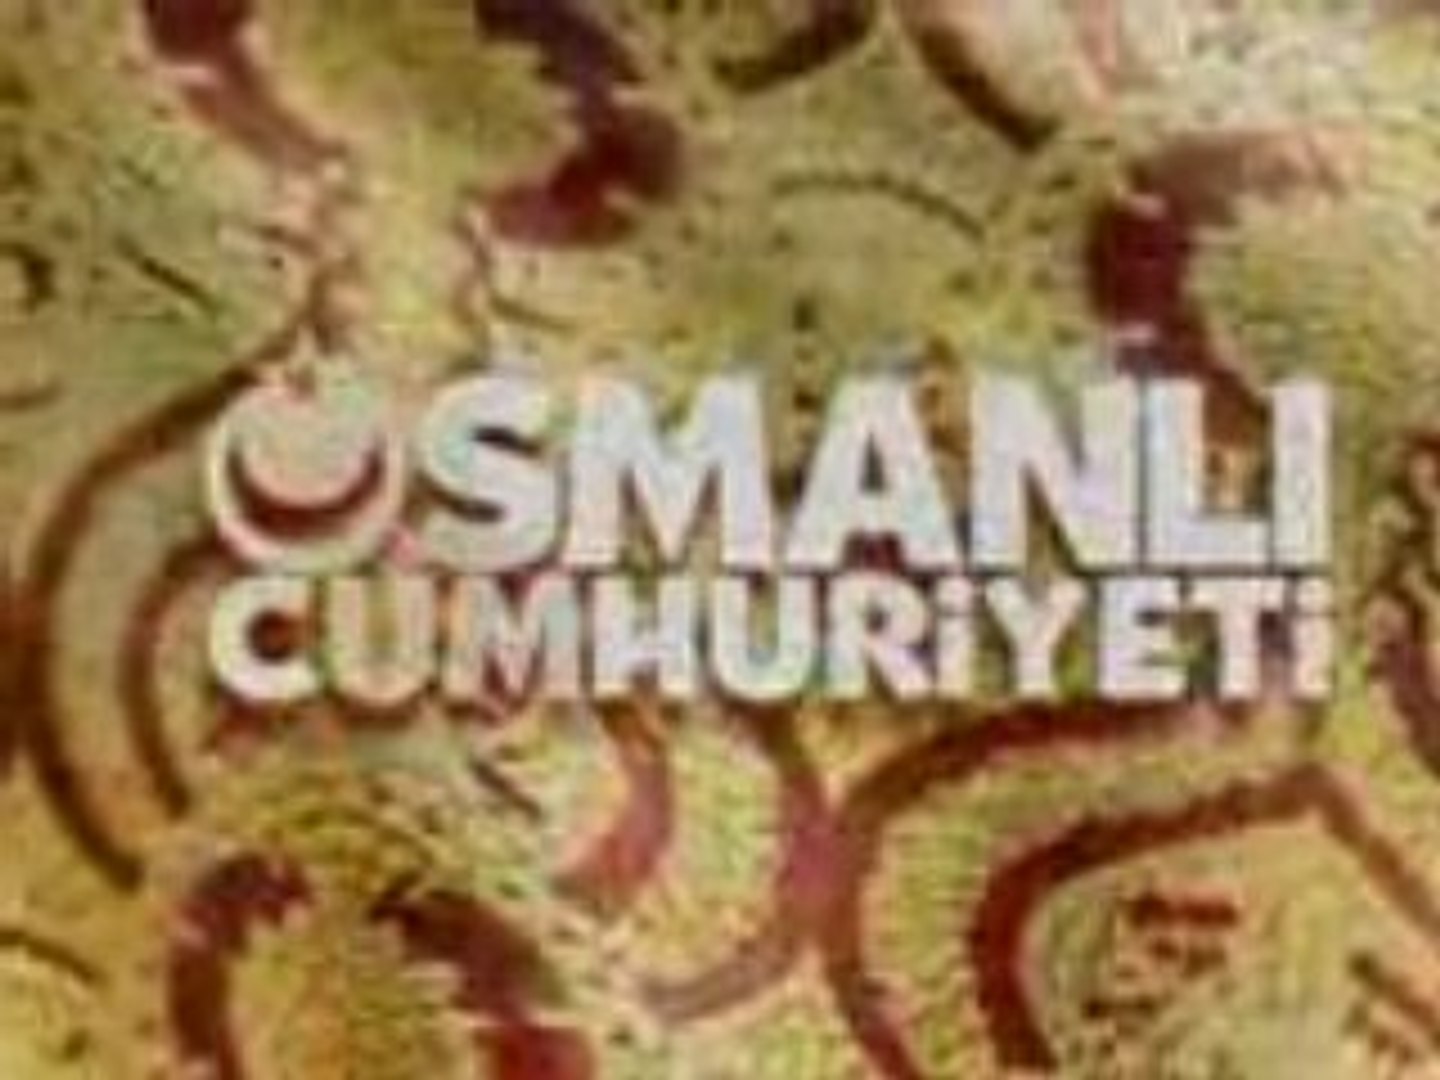 osmanli cumhuriyeti fragman dailymotion video